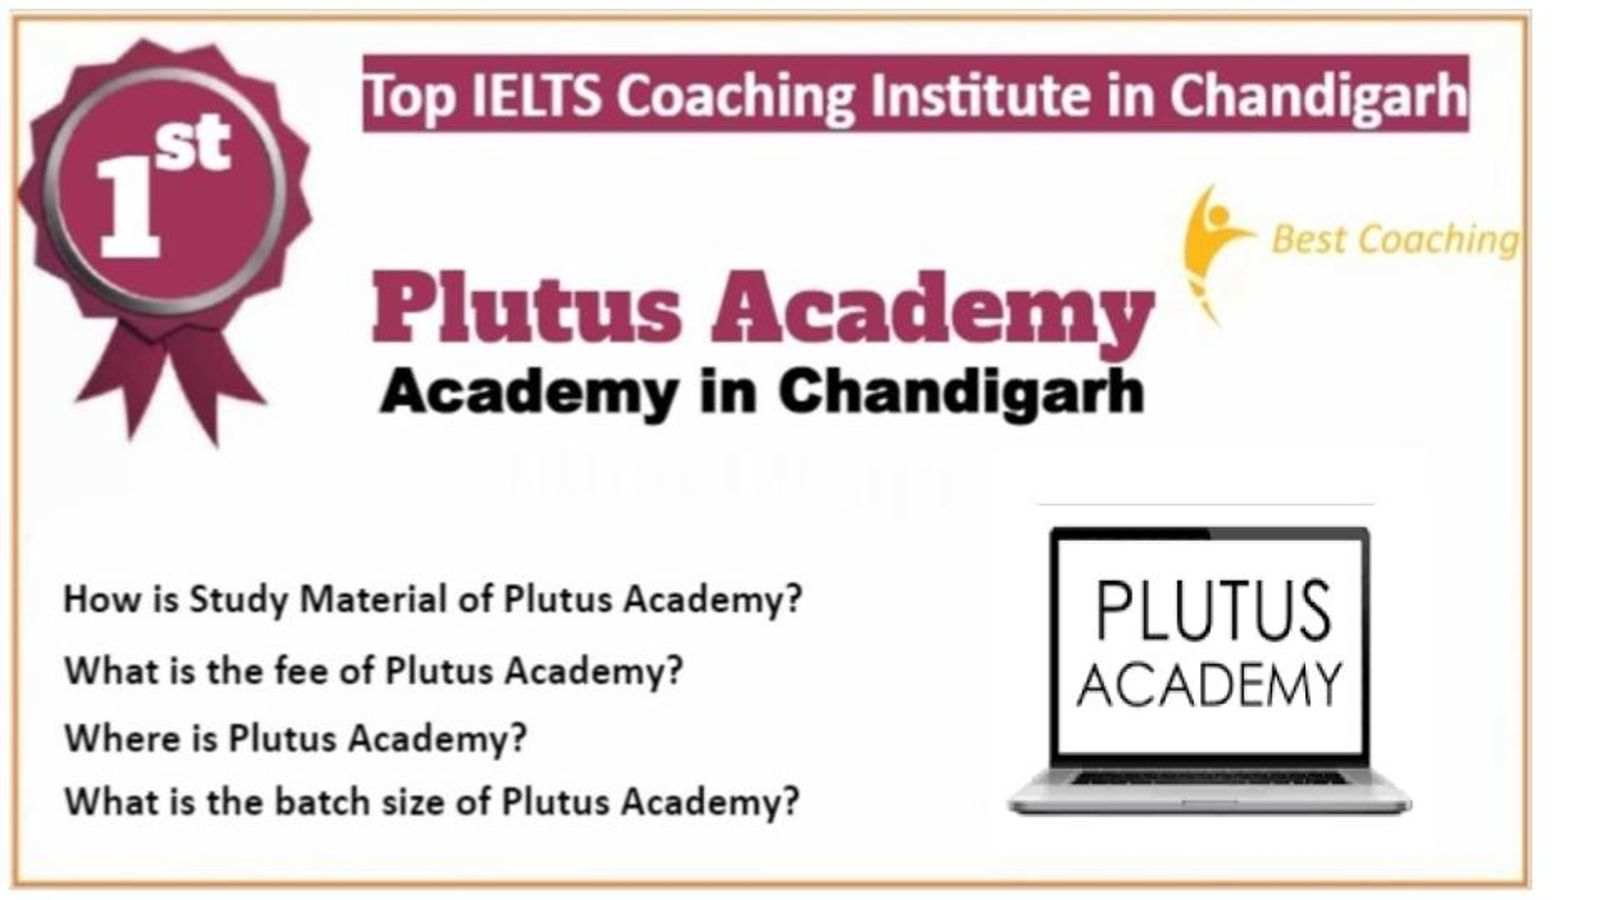  Top ielts Coaching Institute in Chandigarh